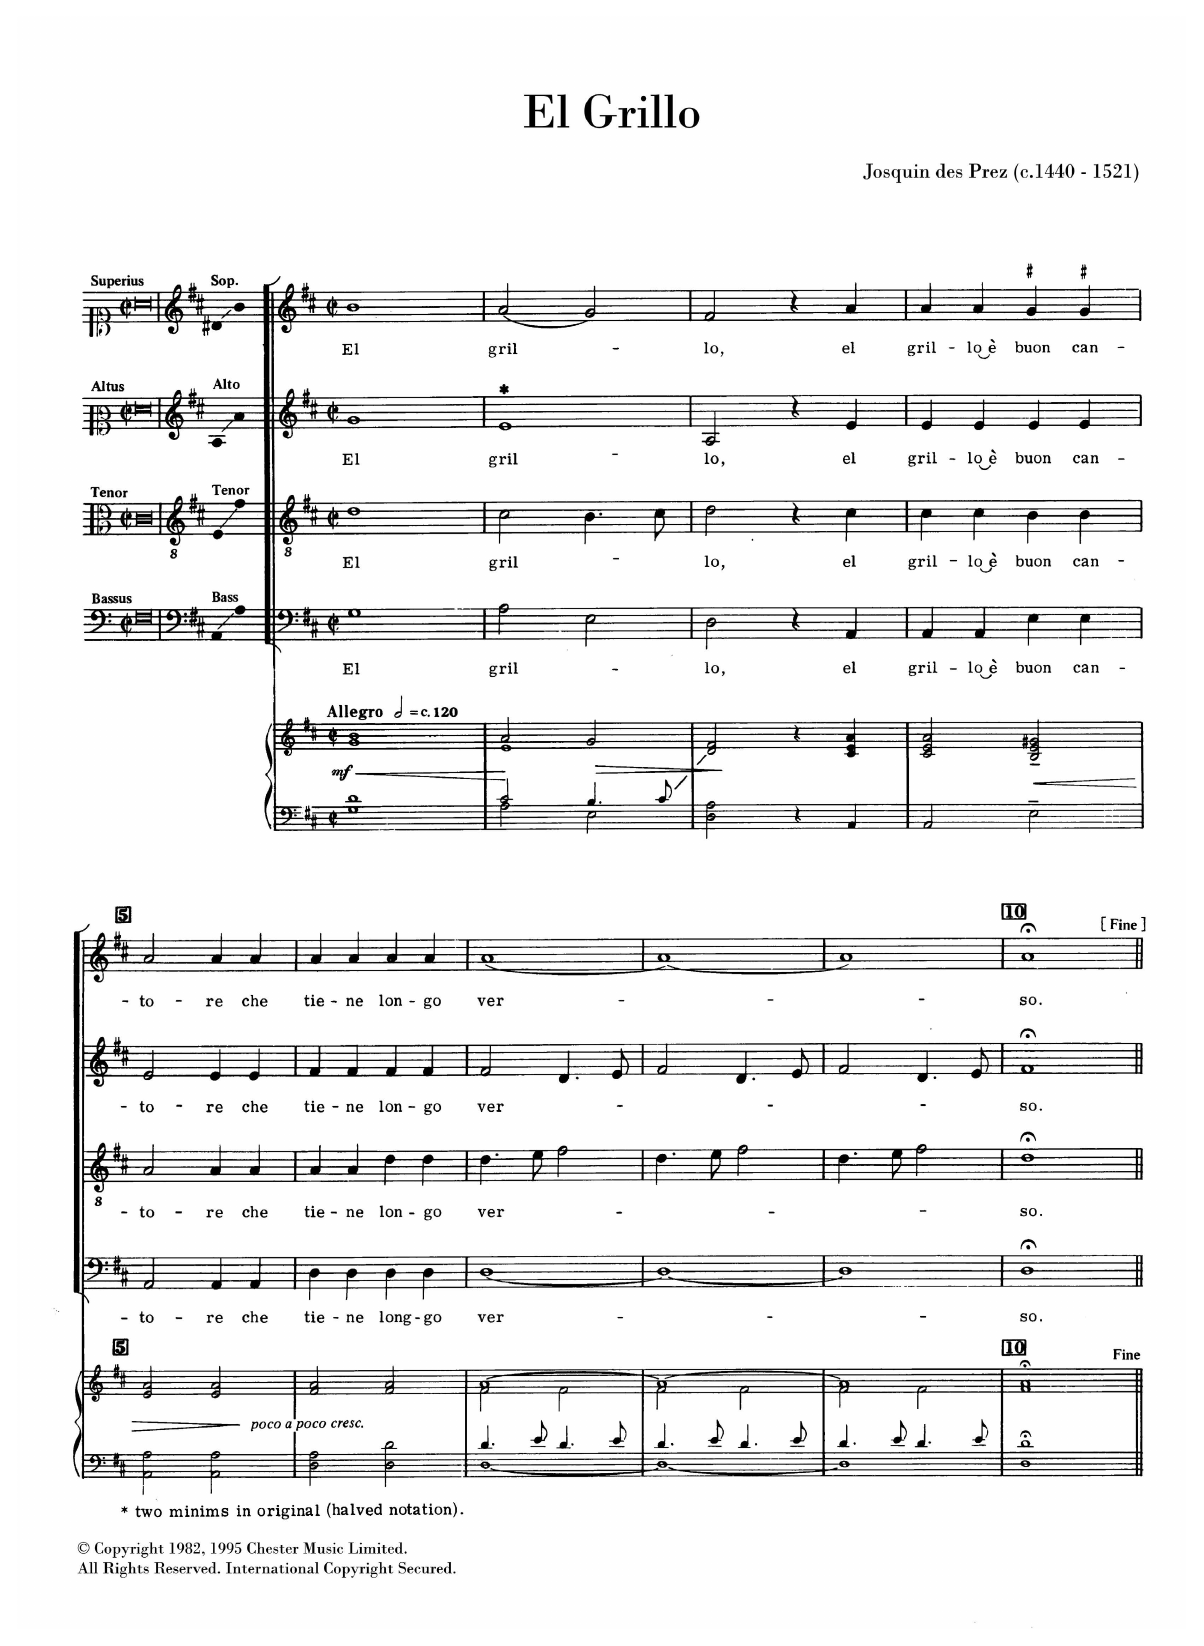 Josquin des Prez El Grillo sheet music notes and chords arranged for SATB Choir